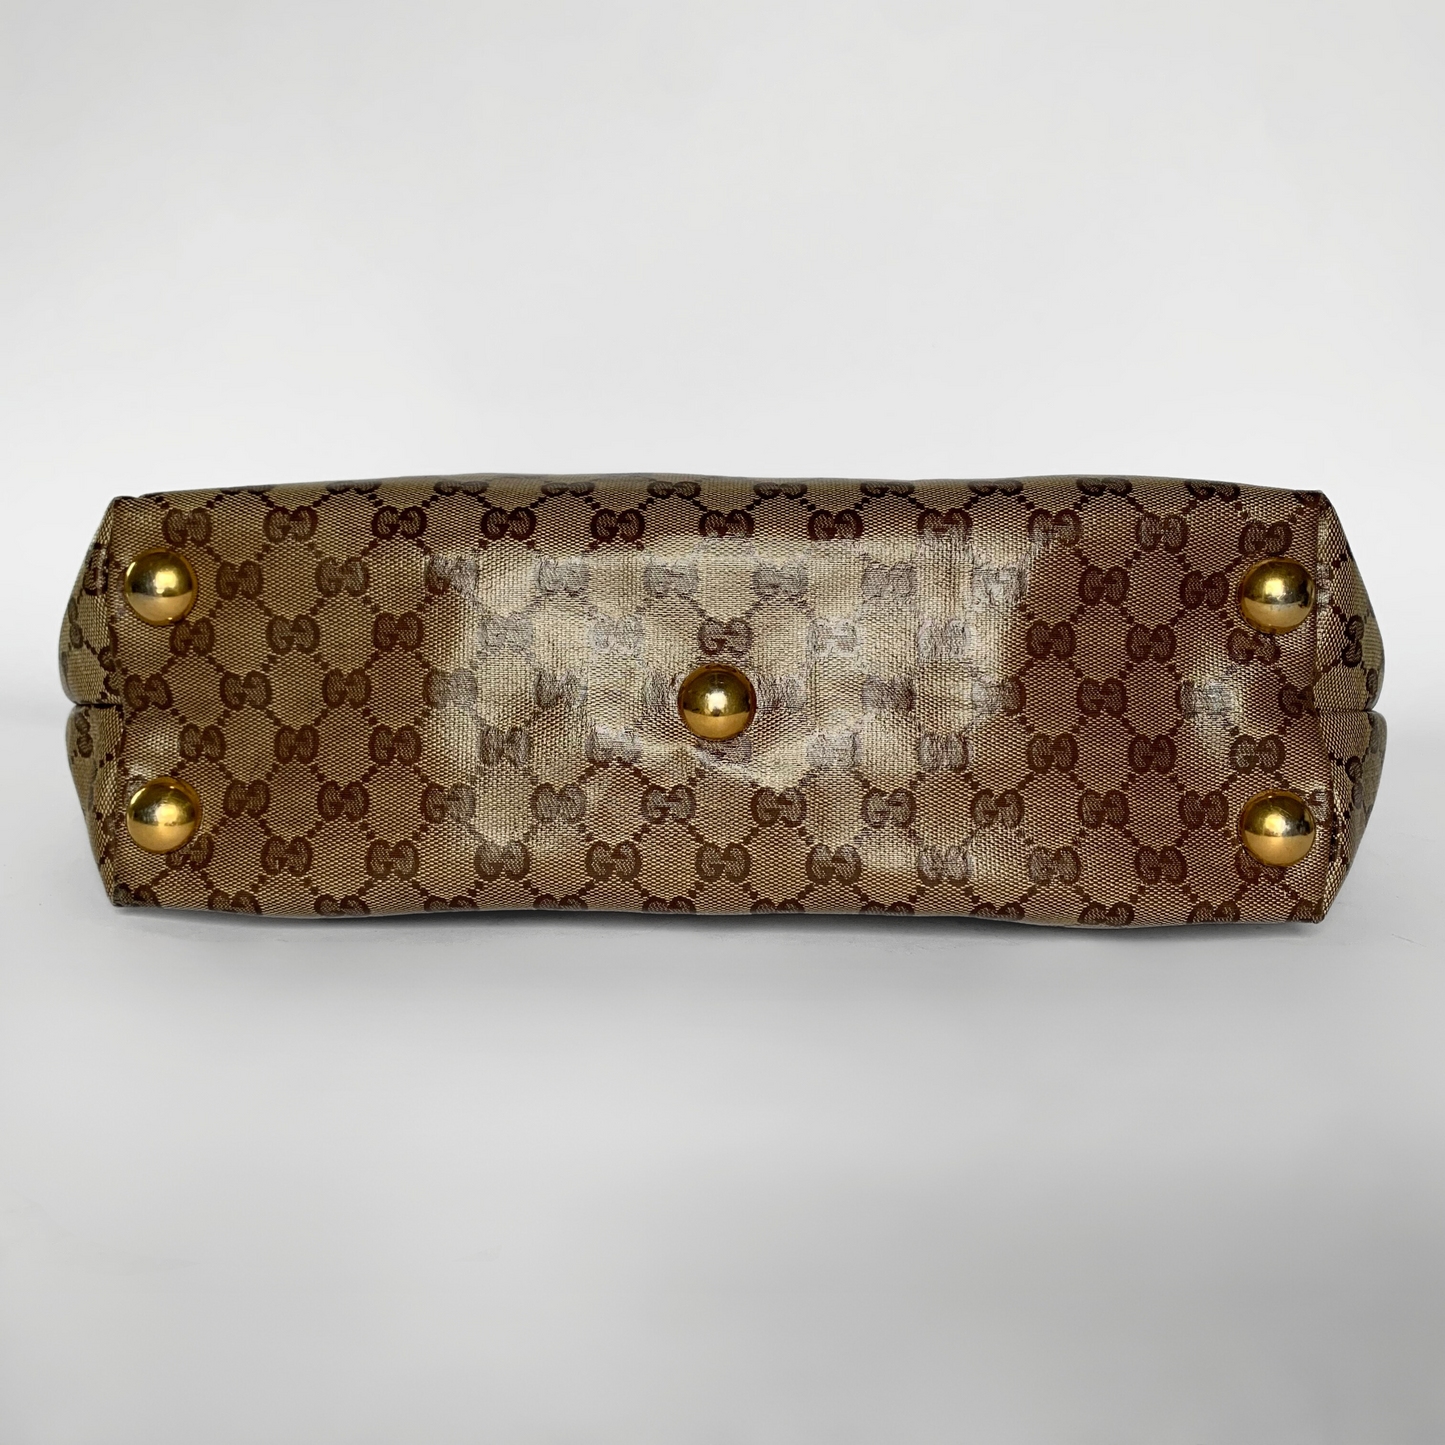 Gucci Gucci Babouska Crystal Tote Bag PVC - Håndvesker - Etoile Luxury Vintage